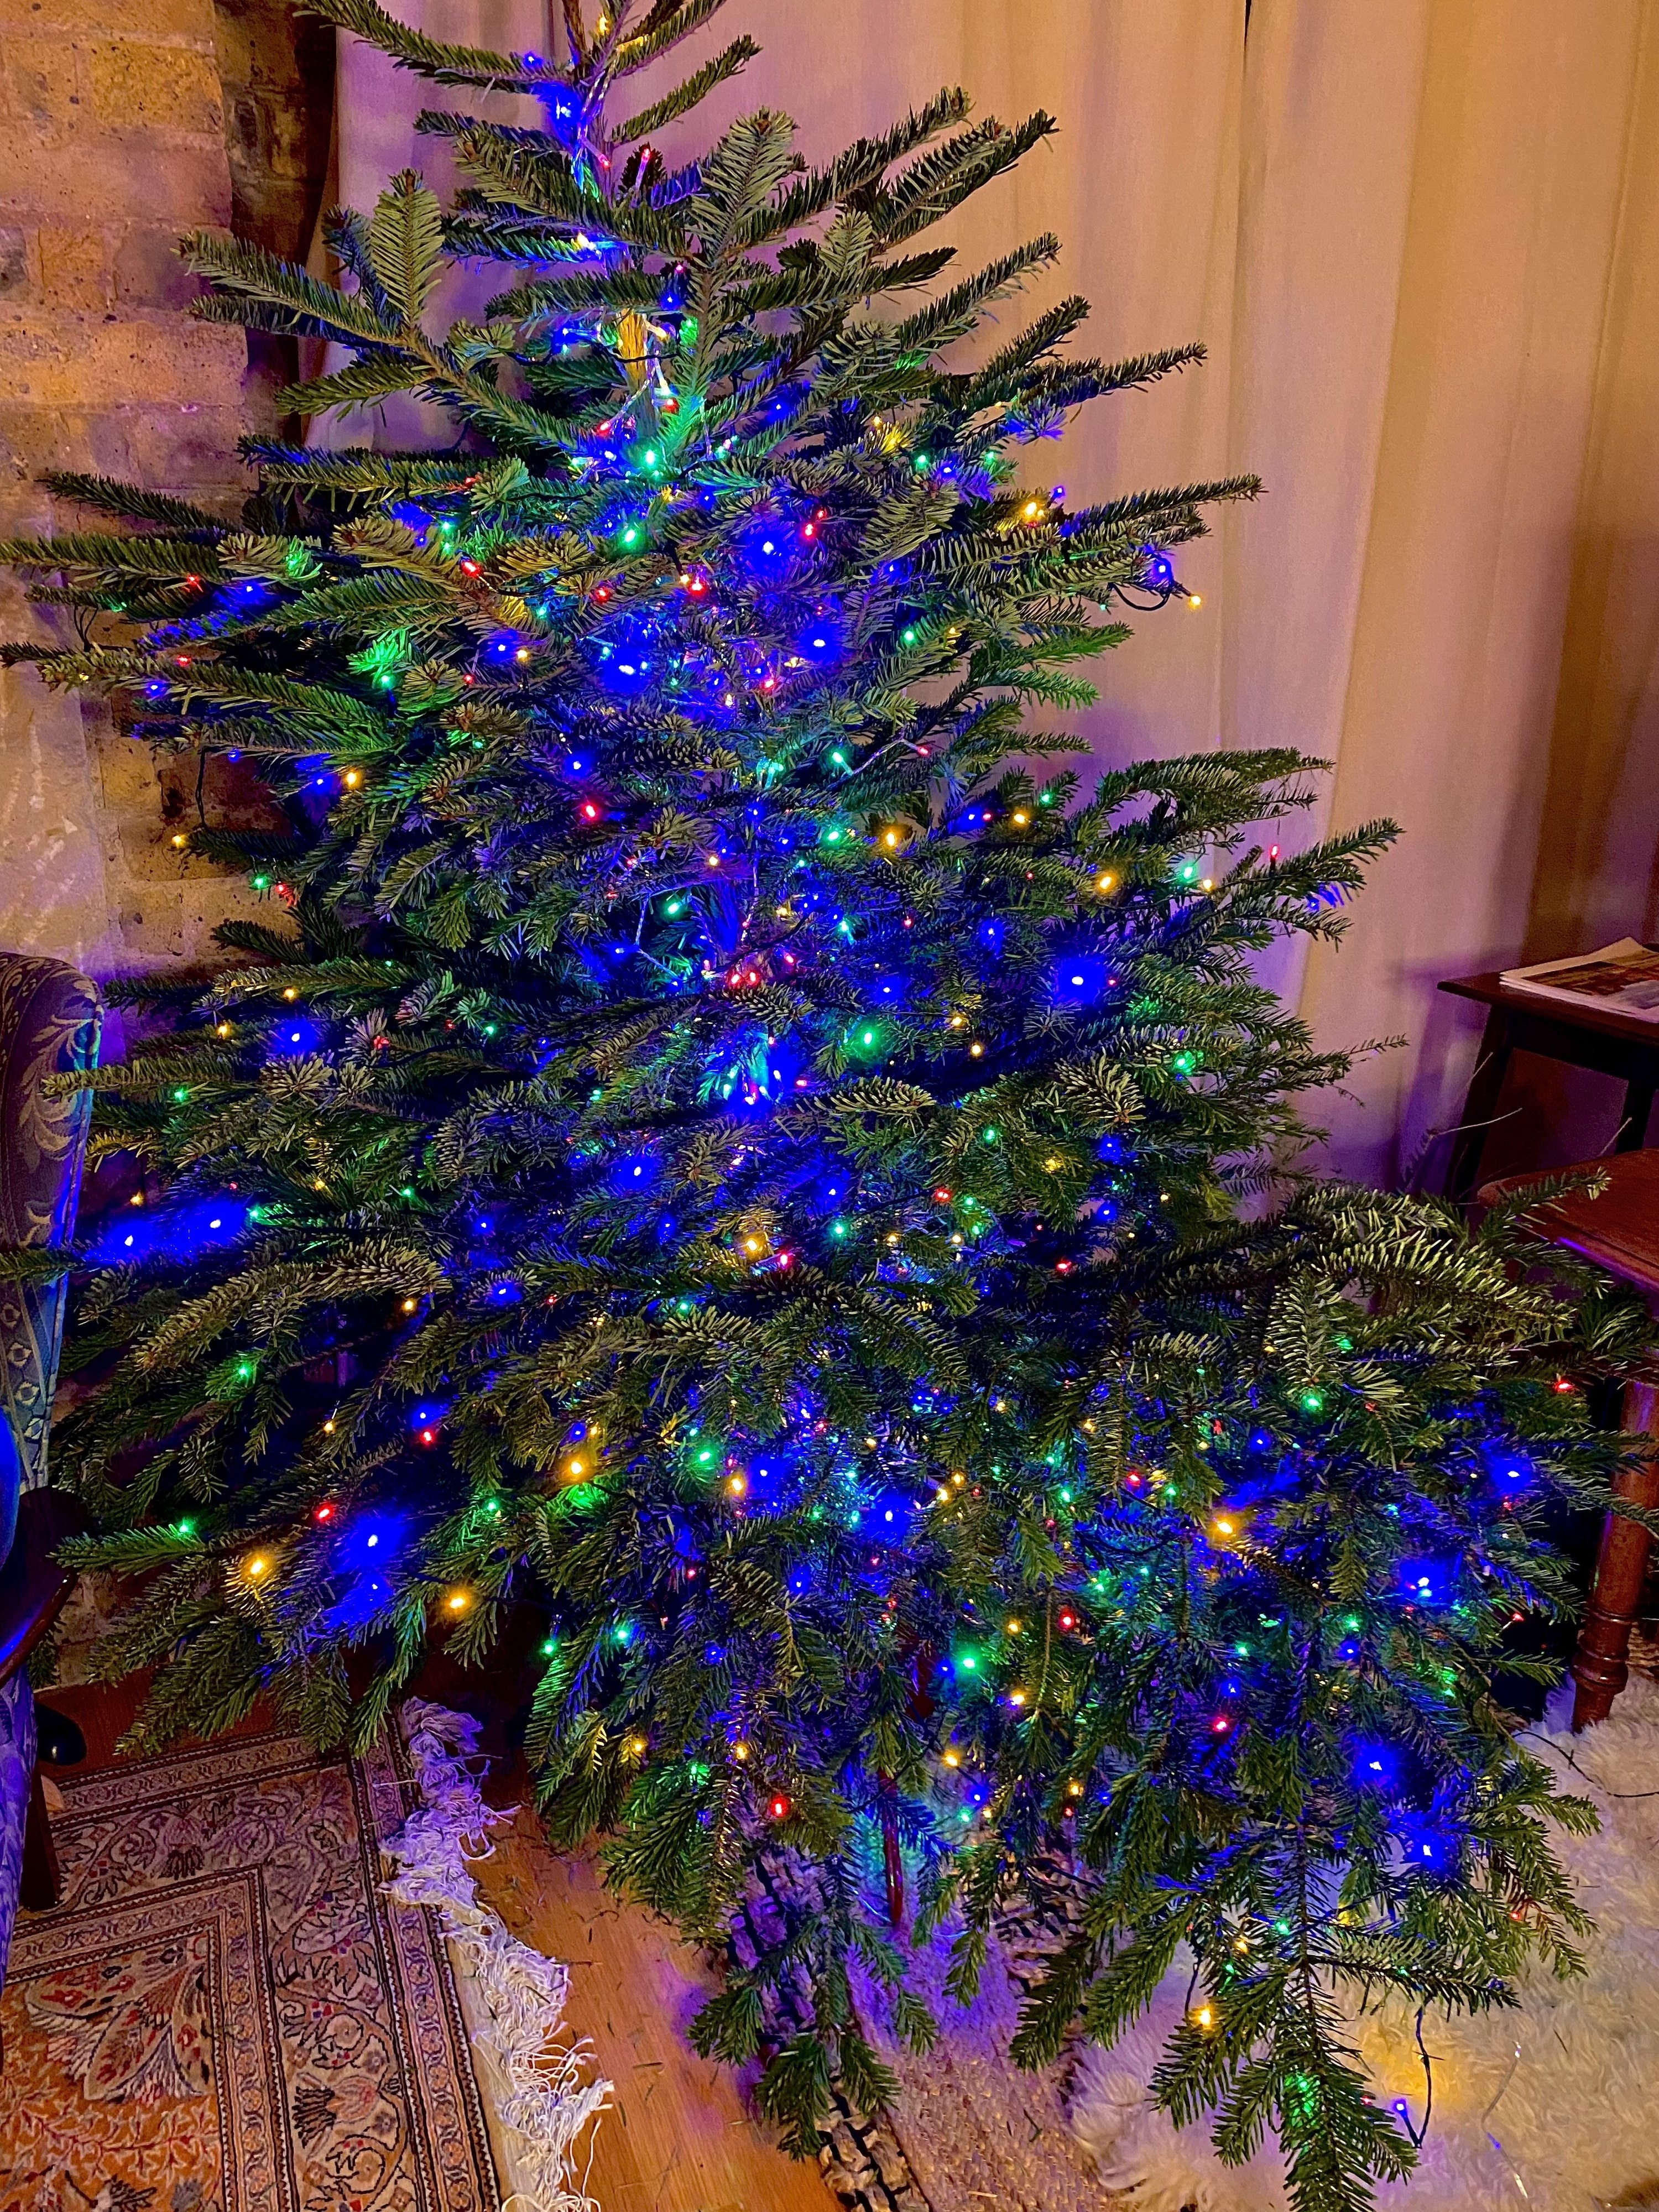 a brightly lit Christmas tree